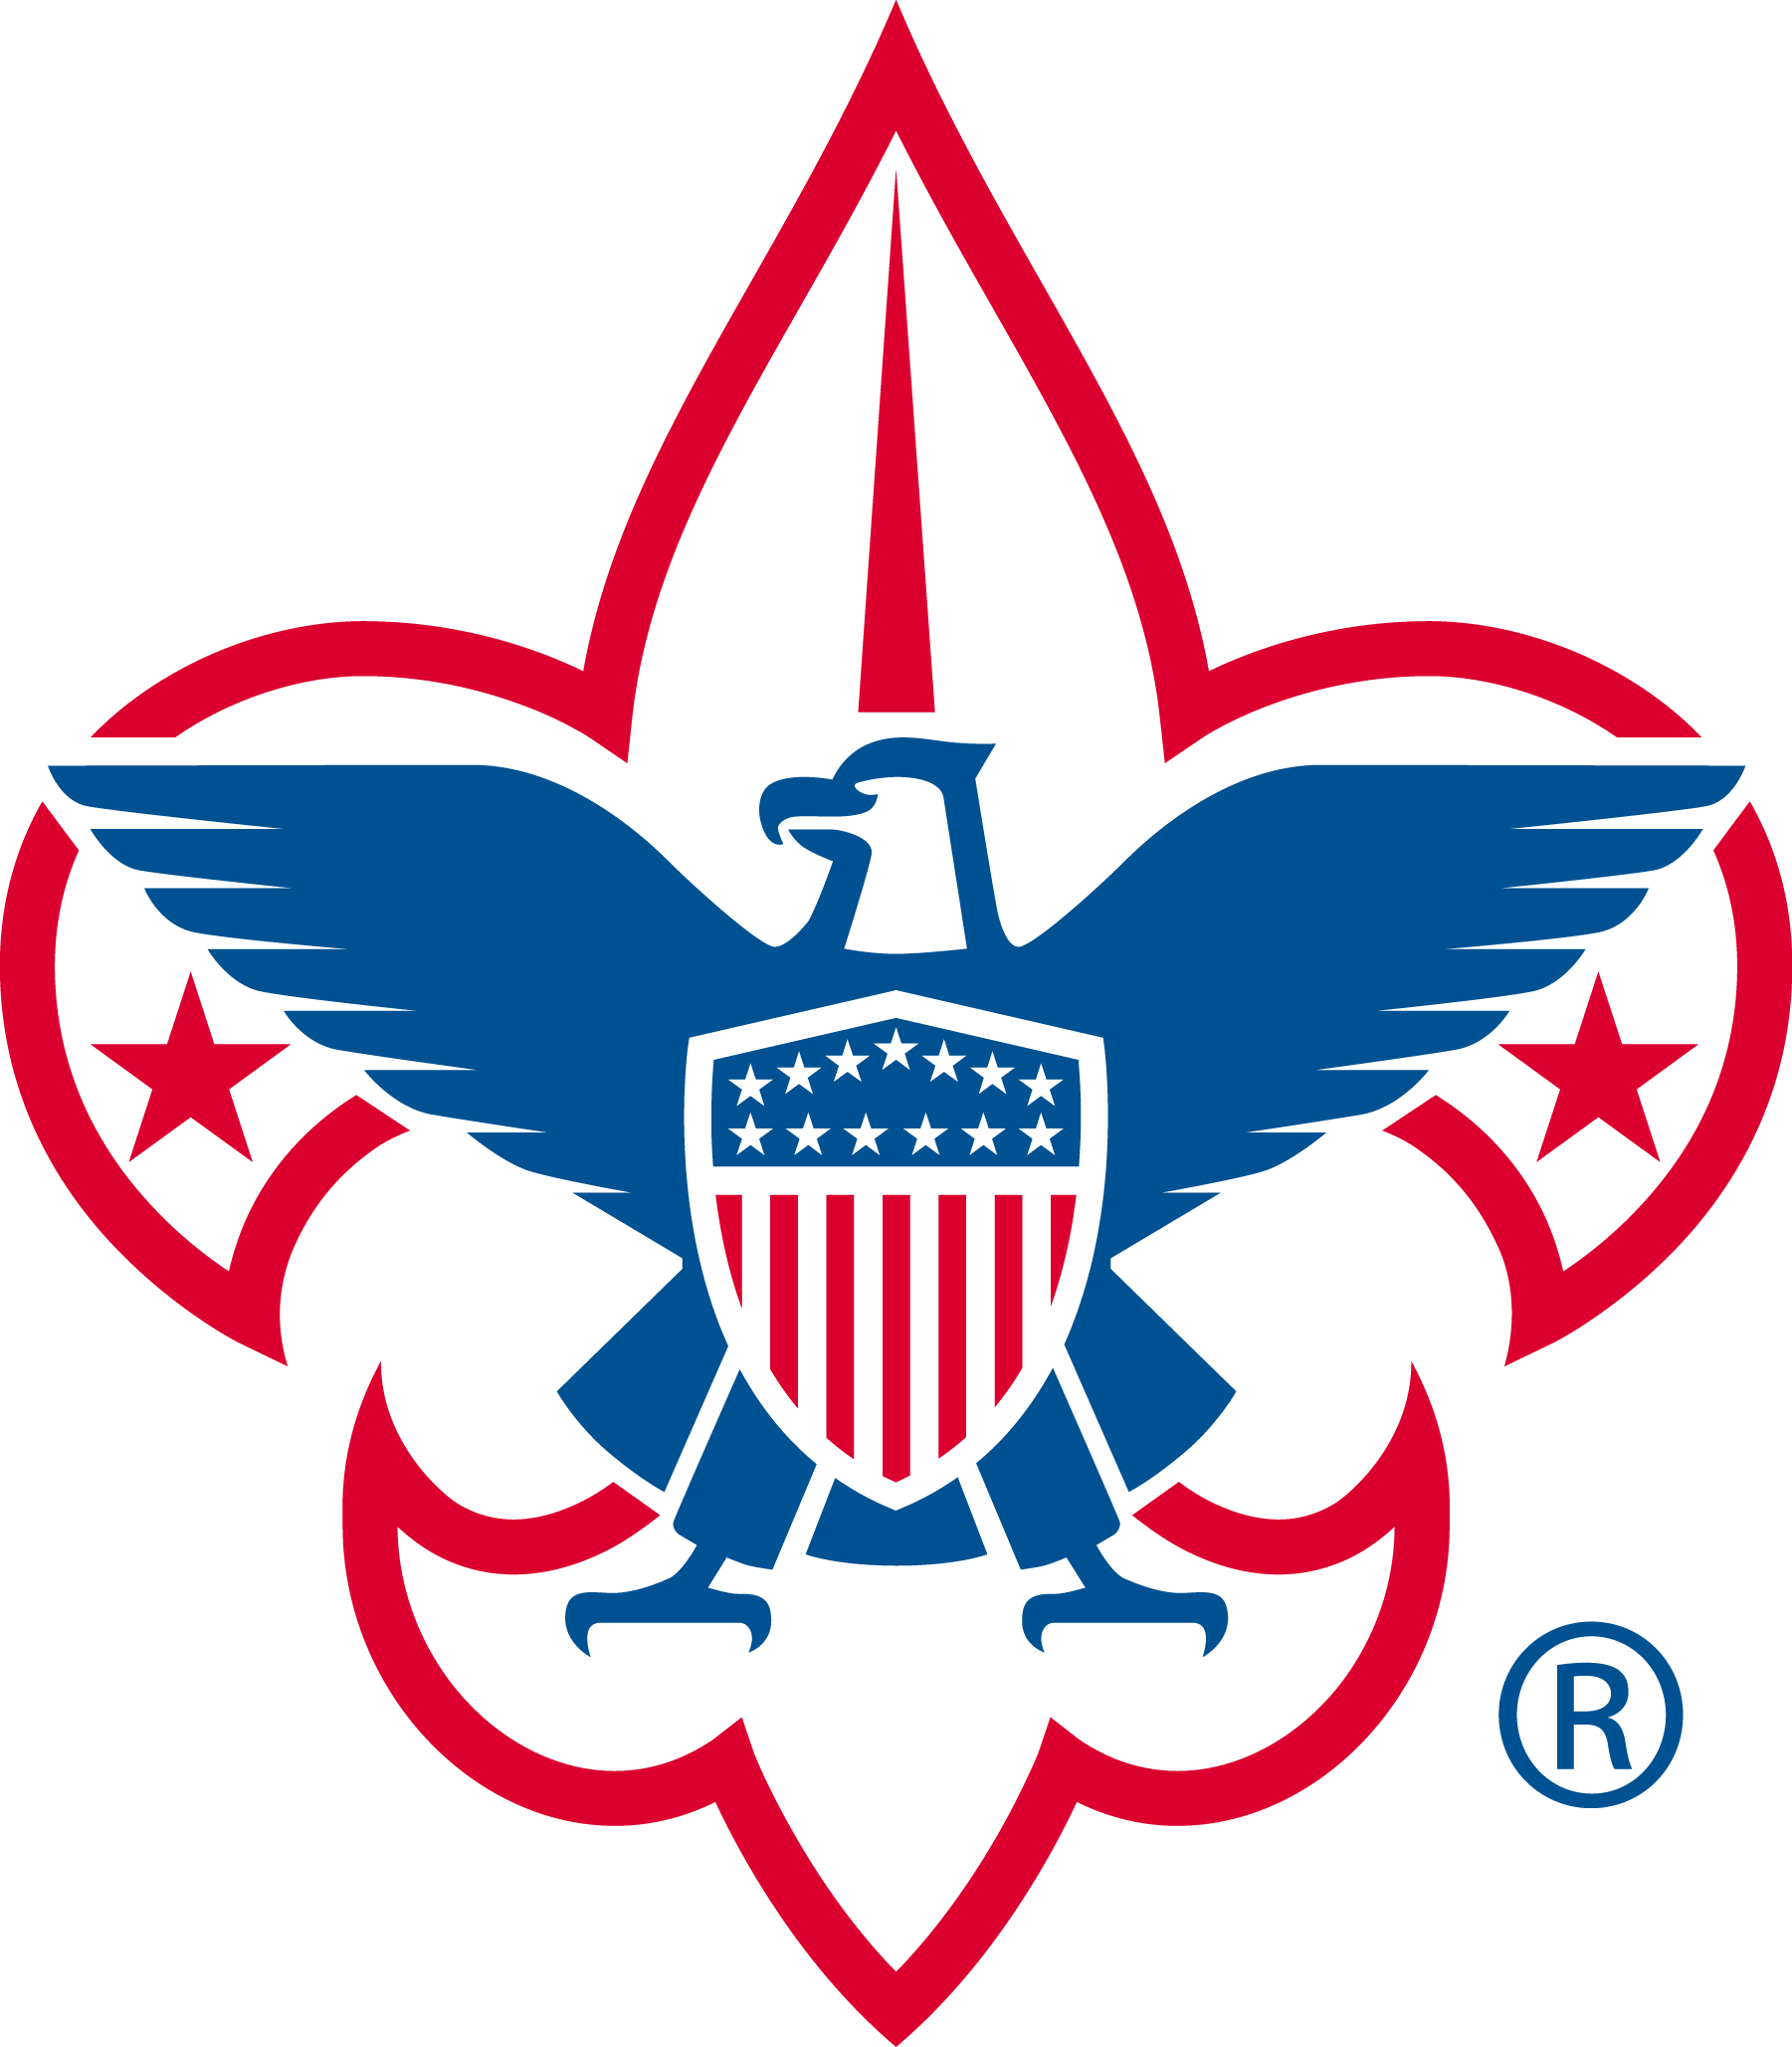 BSA Logo (Boy Scouts of America) png